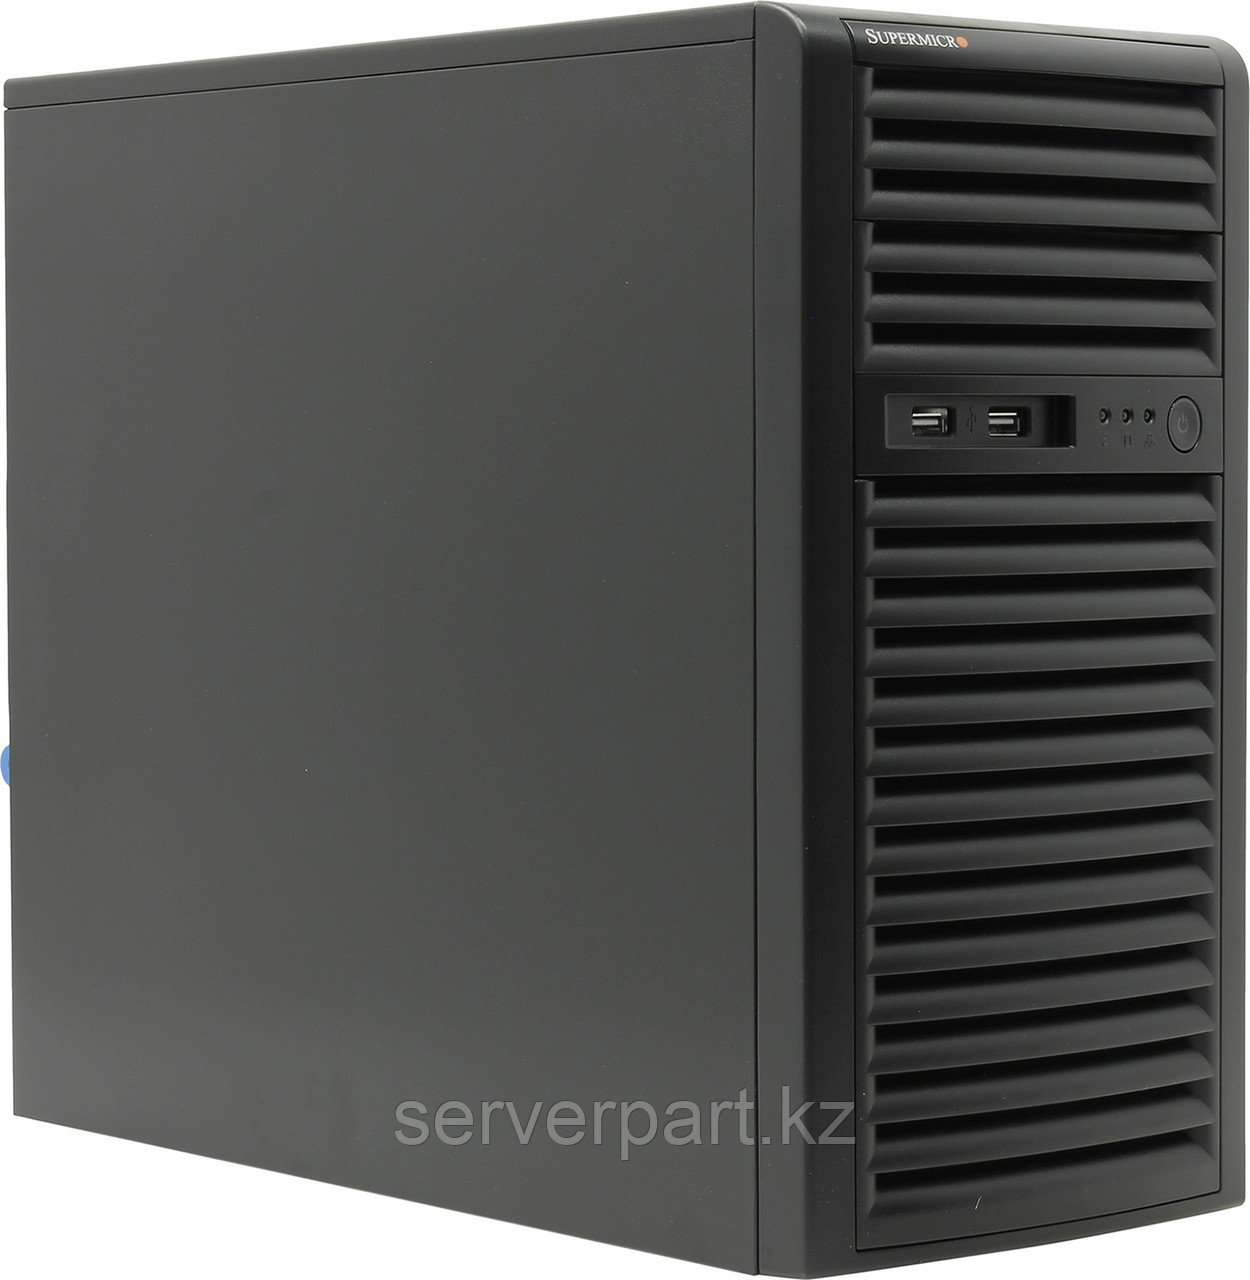 Сервер Supermicro 5039D Tower/4-core intel xeon E3-1220v6 3GHz/16GB UDIMM nECC/1x240GB SSD RI Hyb